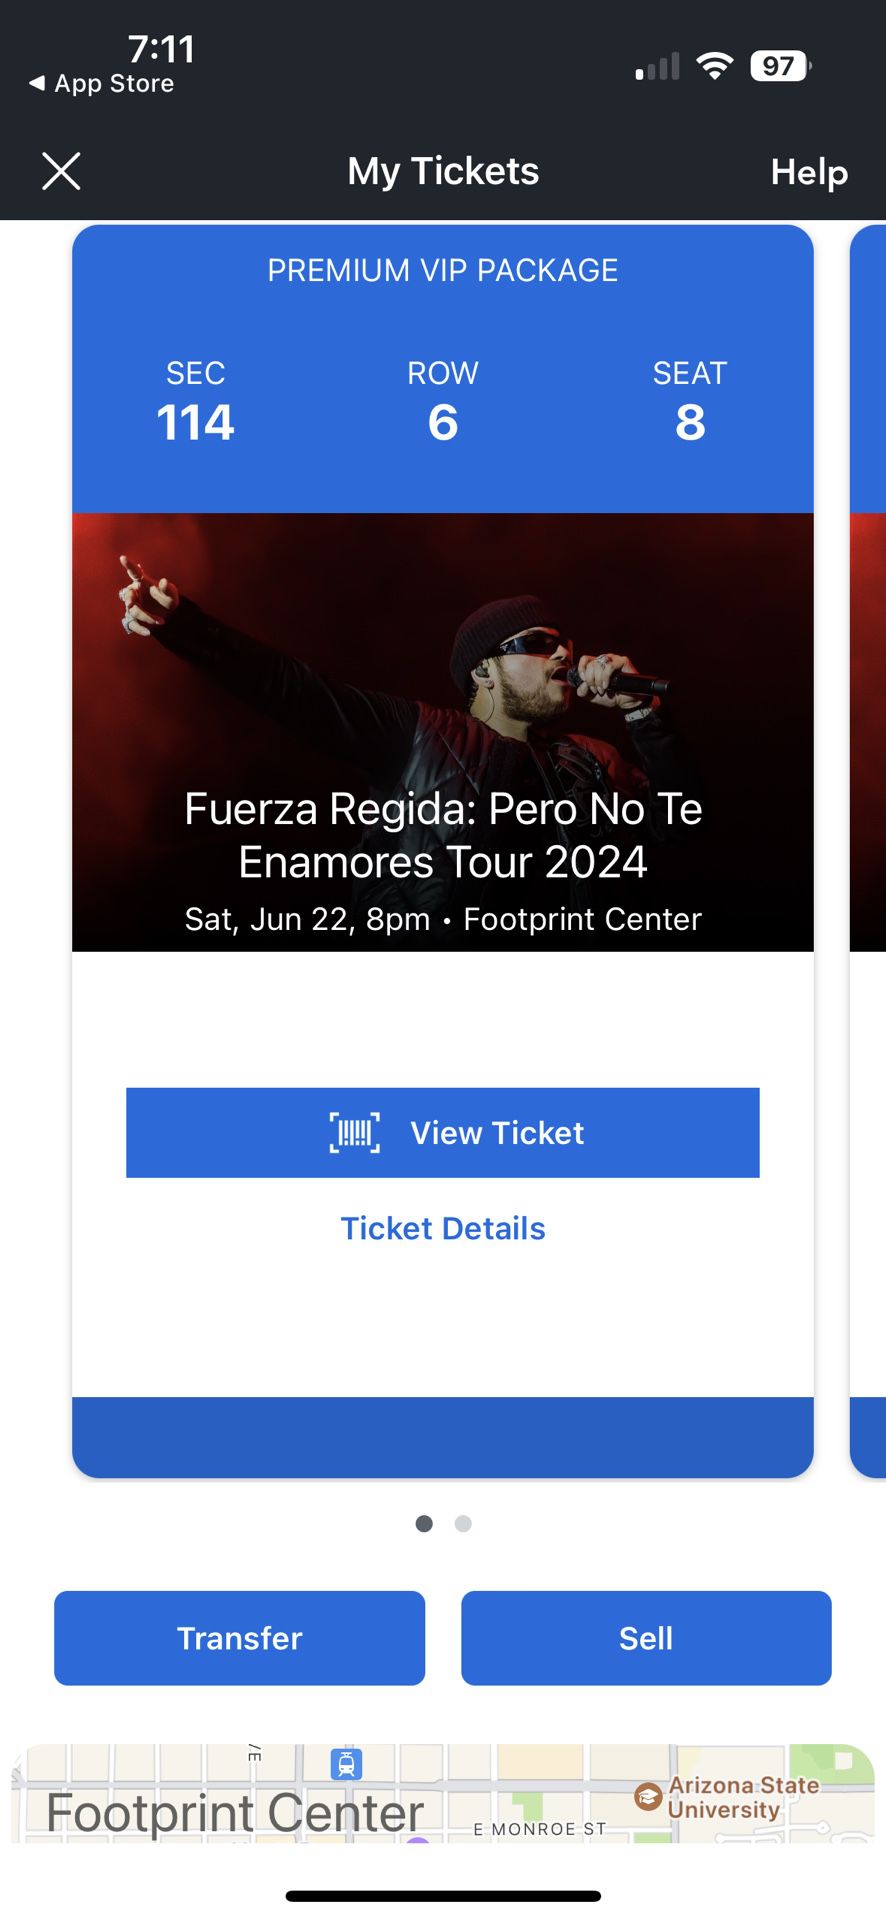 2 Fuerza Regida Tickets